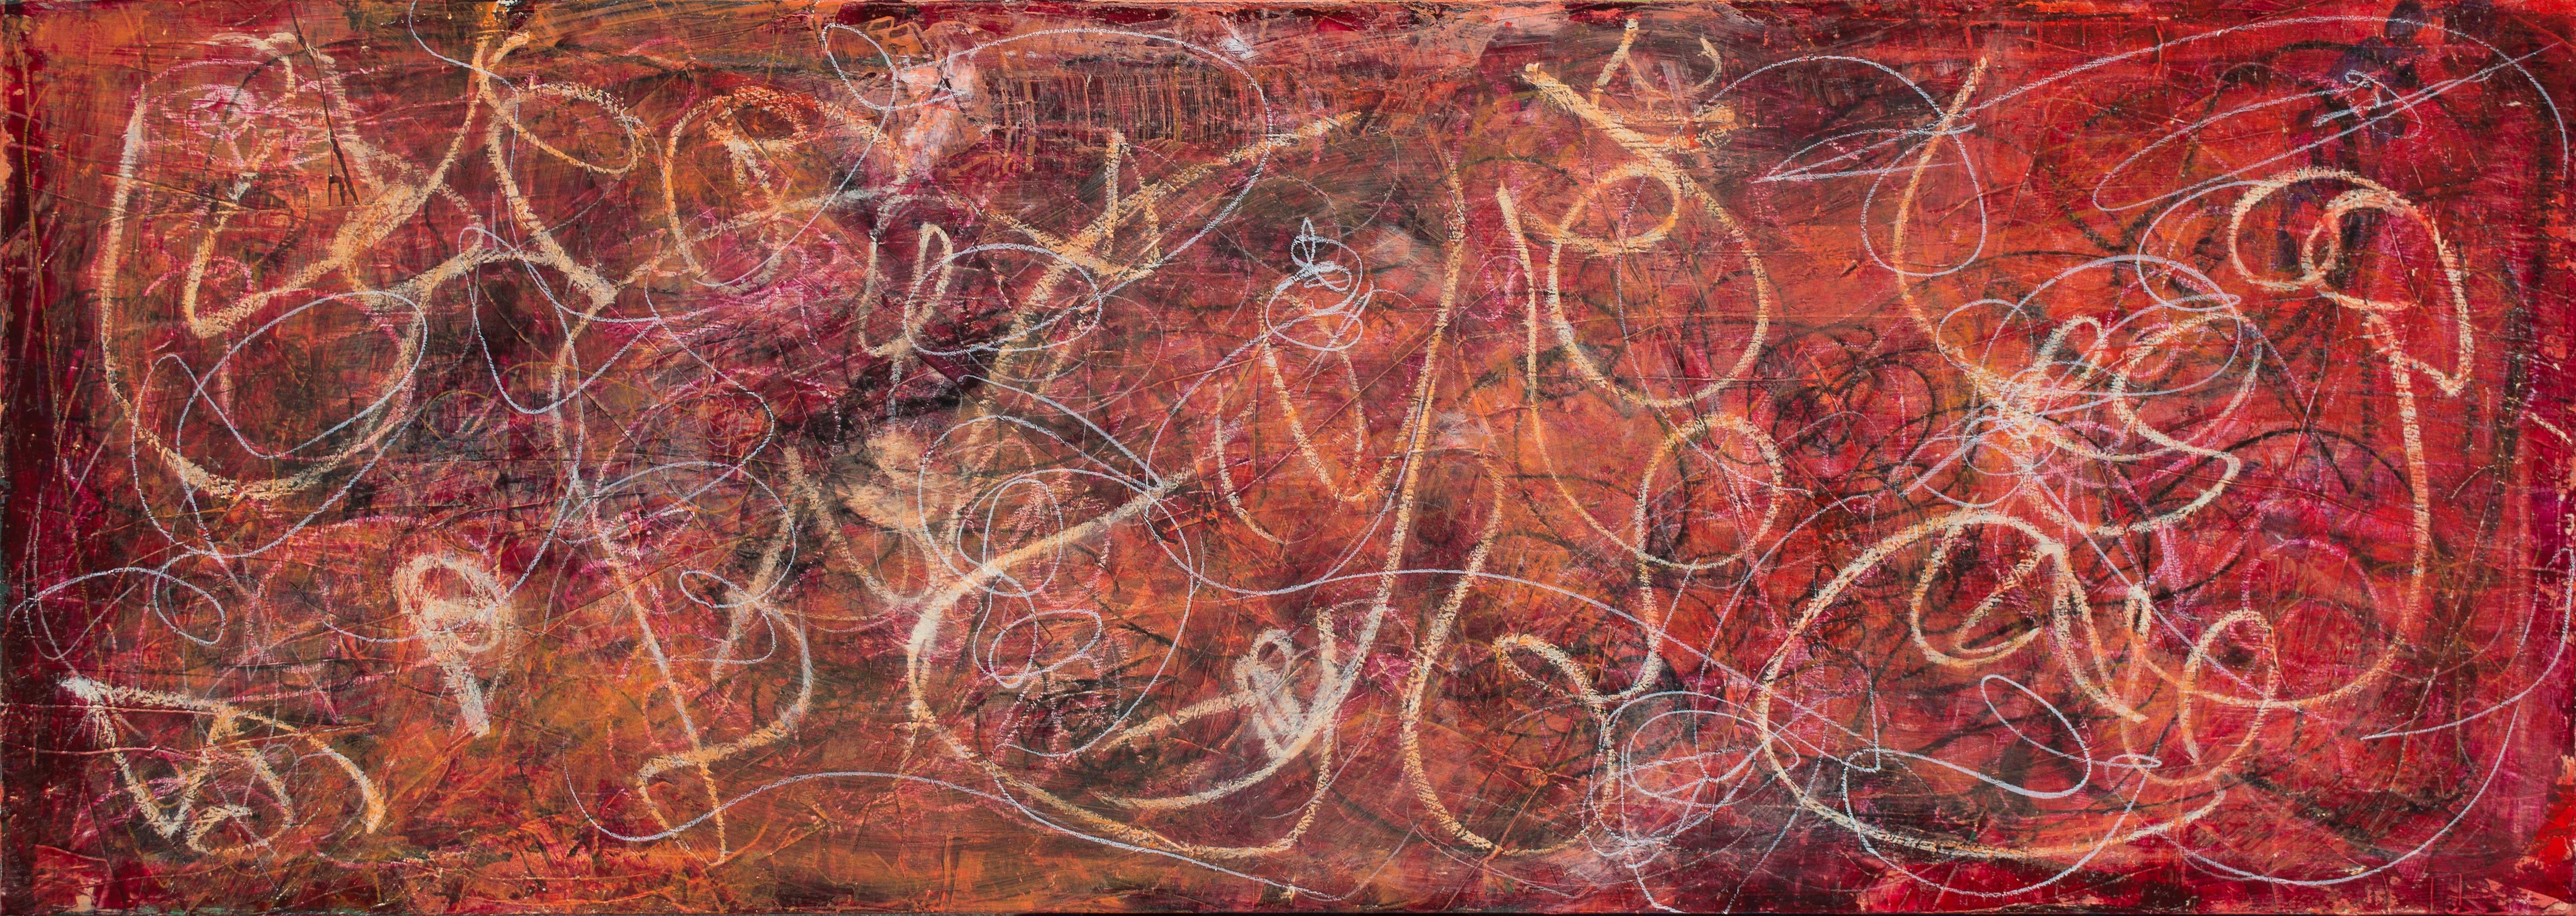 Thomas Slate Abstract Painting - Orange Flip